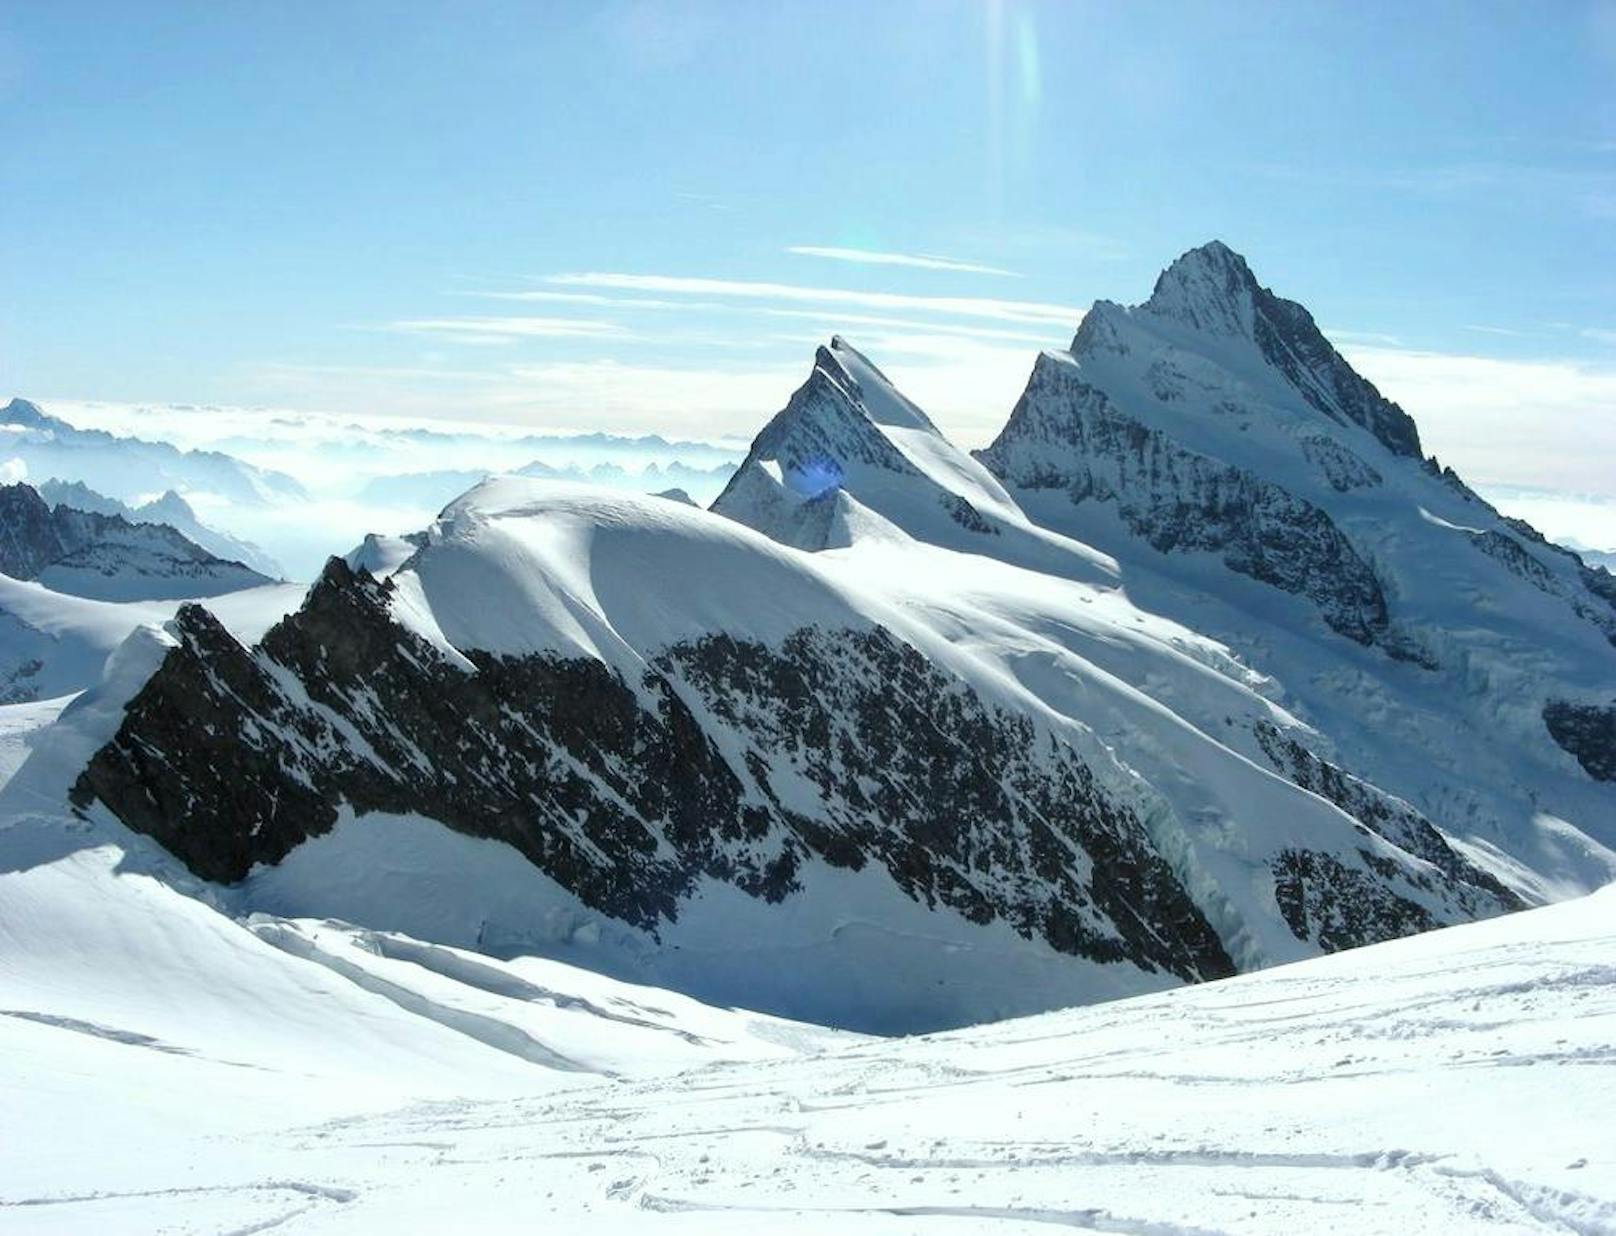 Alpen-Gipfel im Kreuzfeuer wegen "rassistischem" Namen